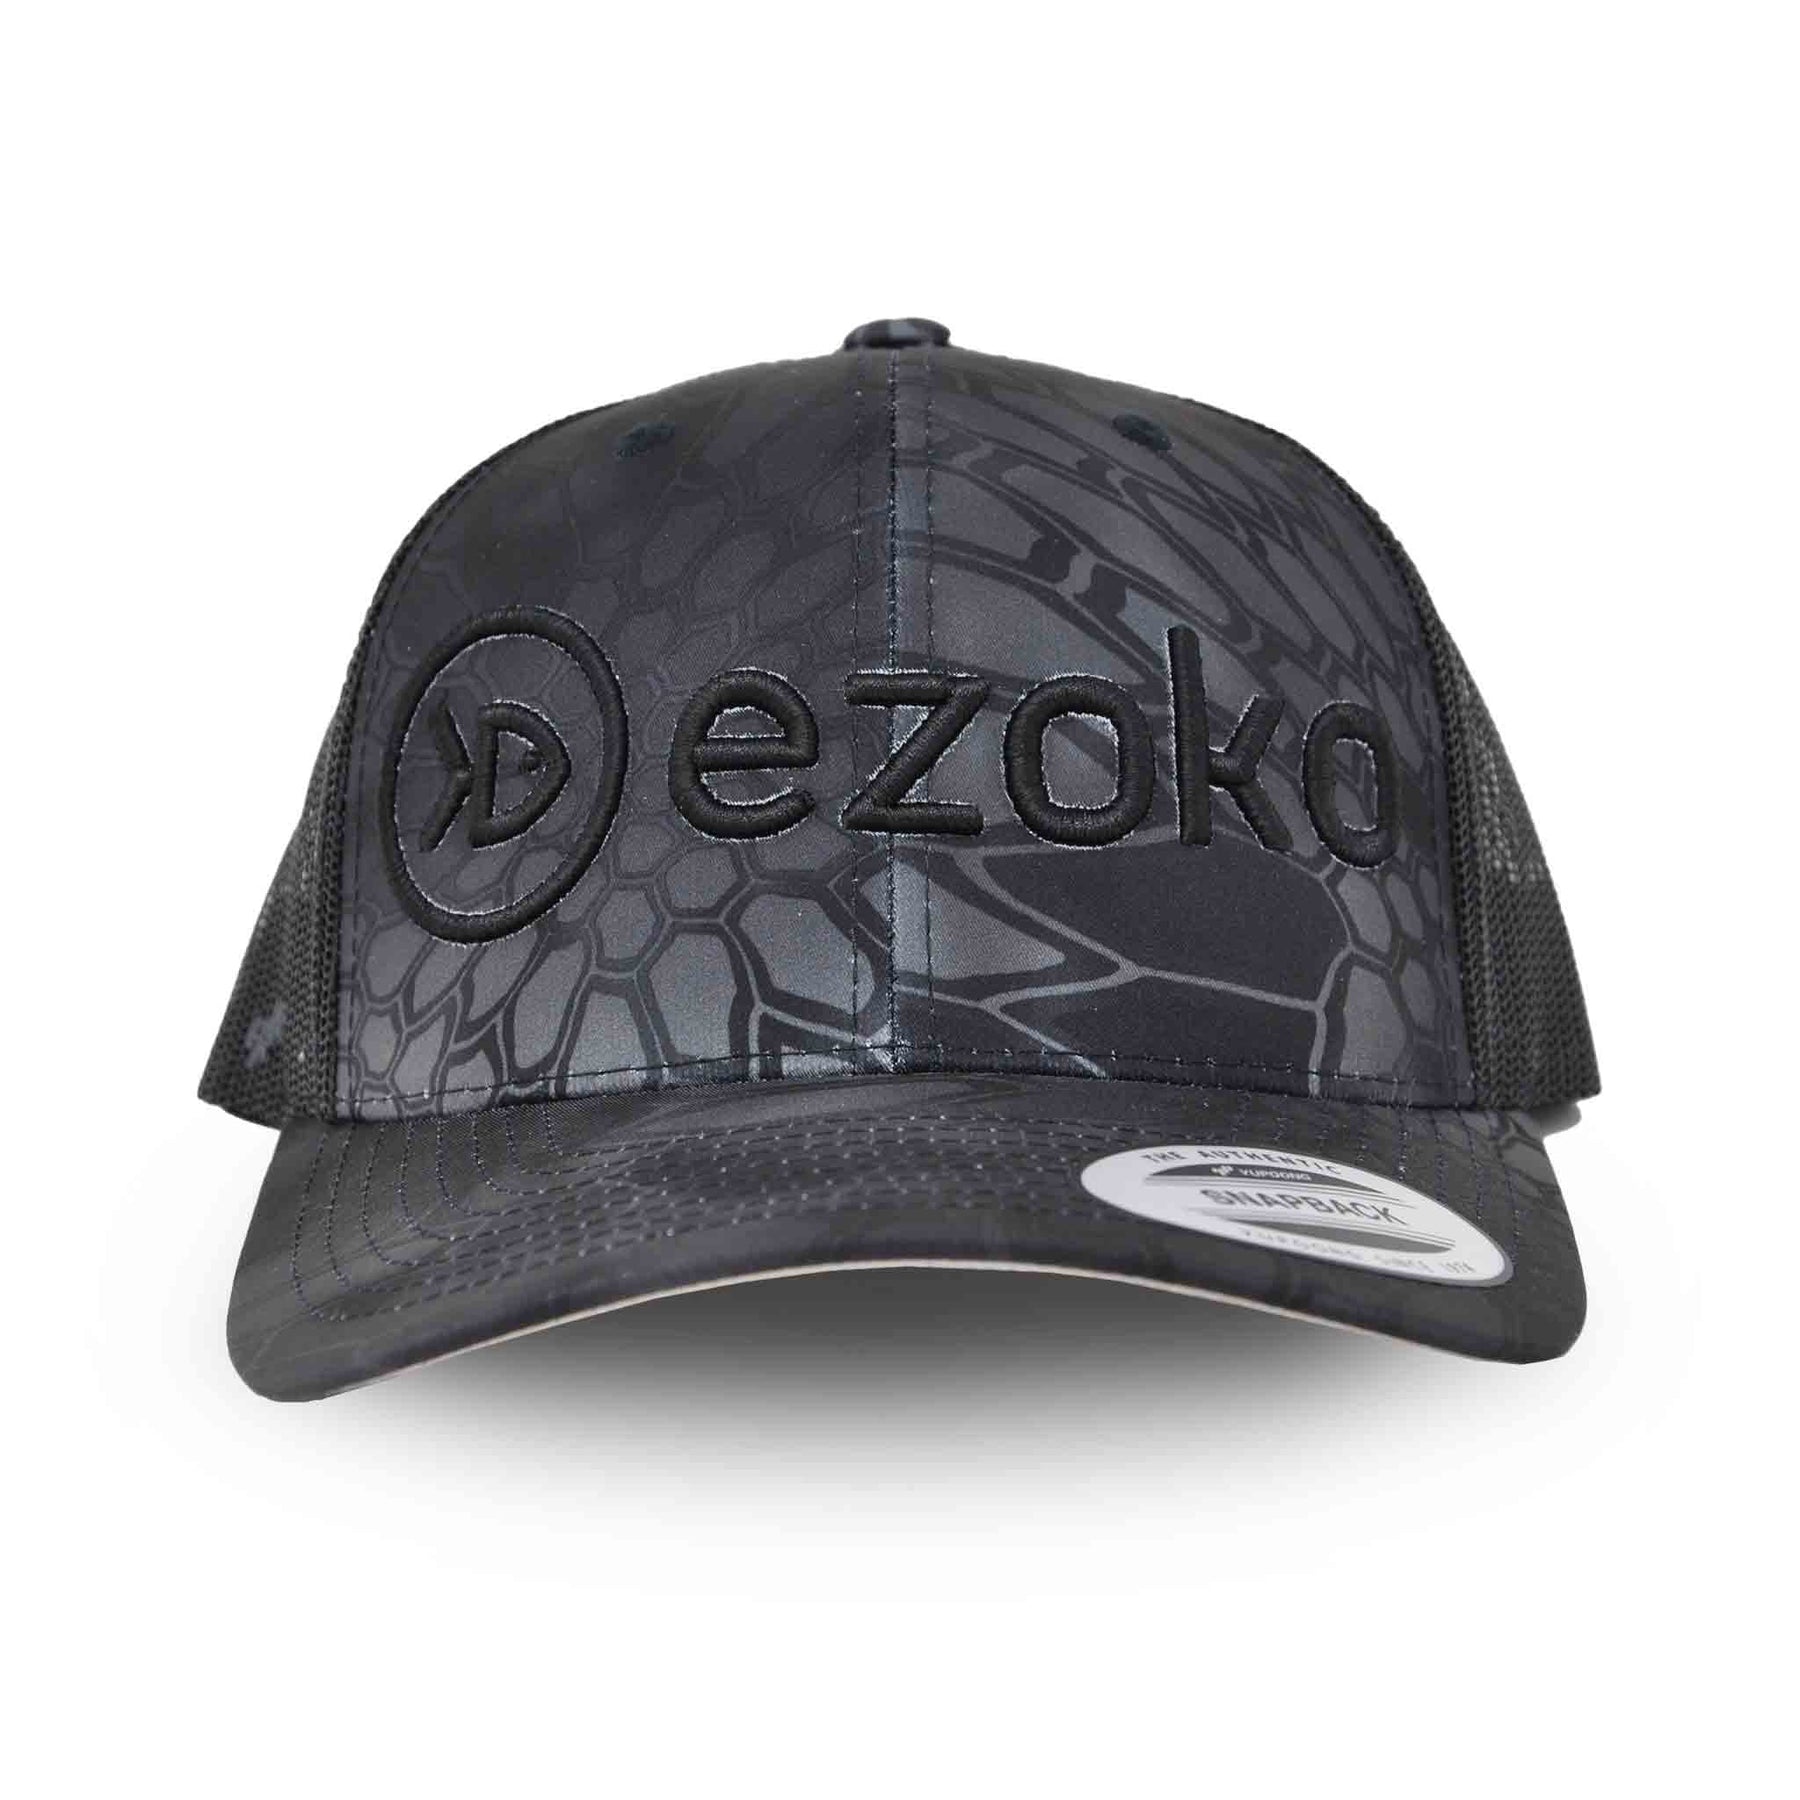 Coho Salmon Trucker Hat